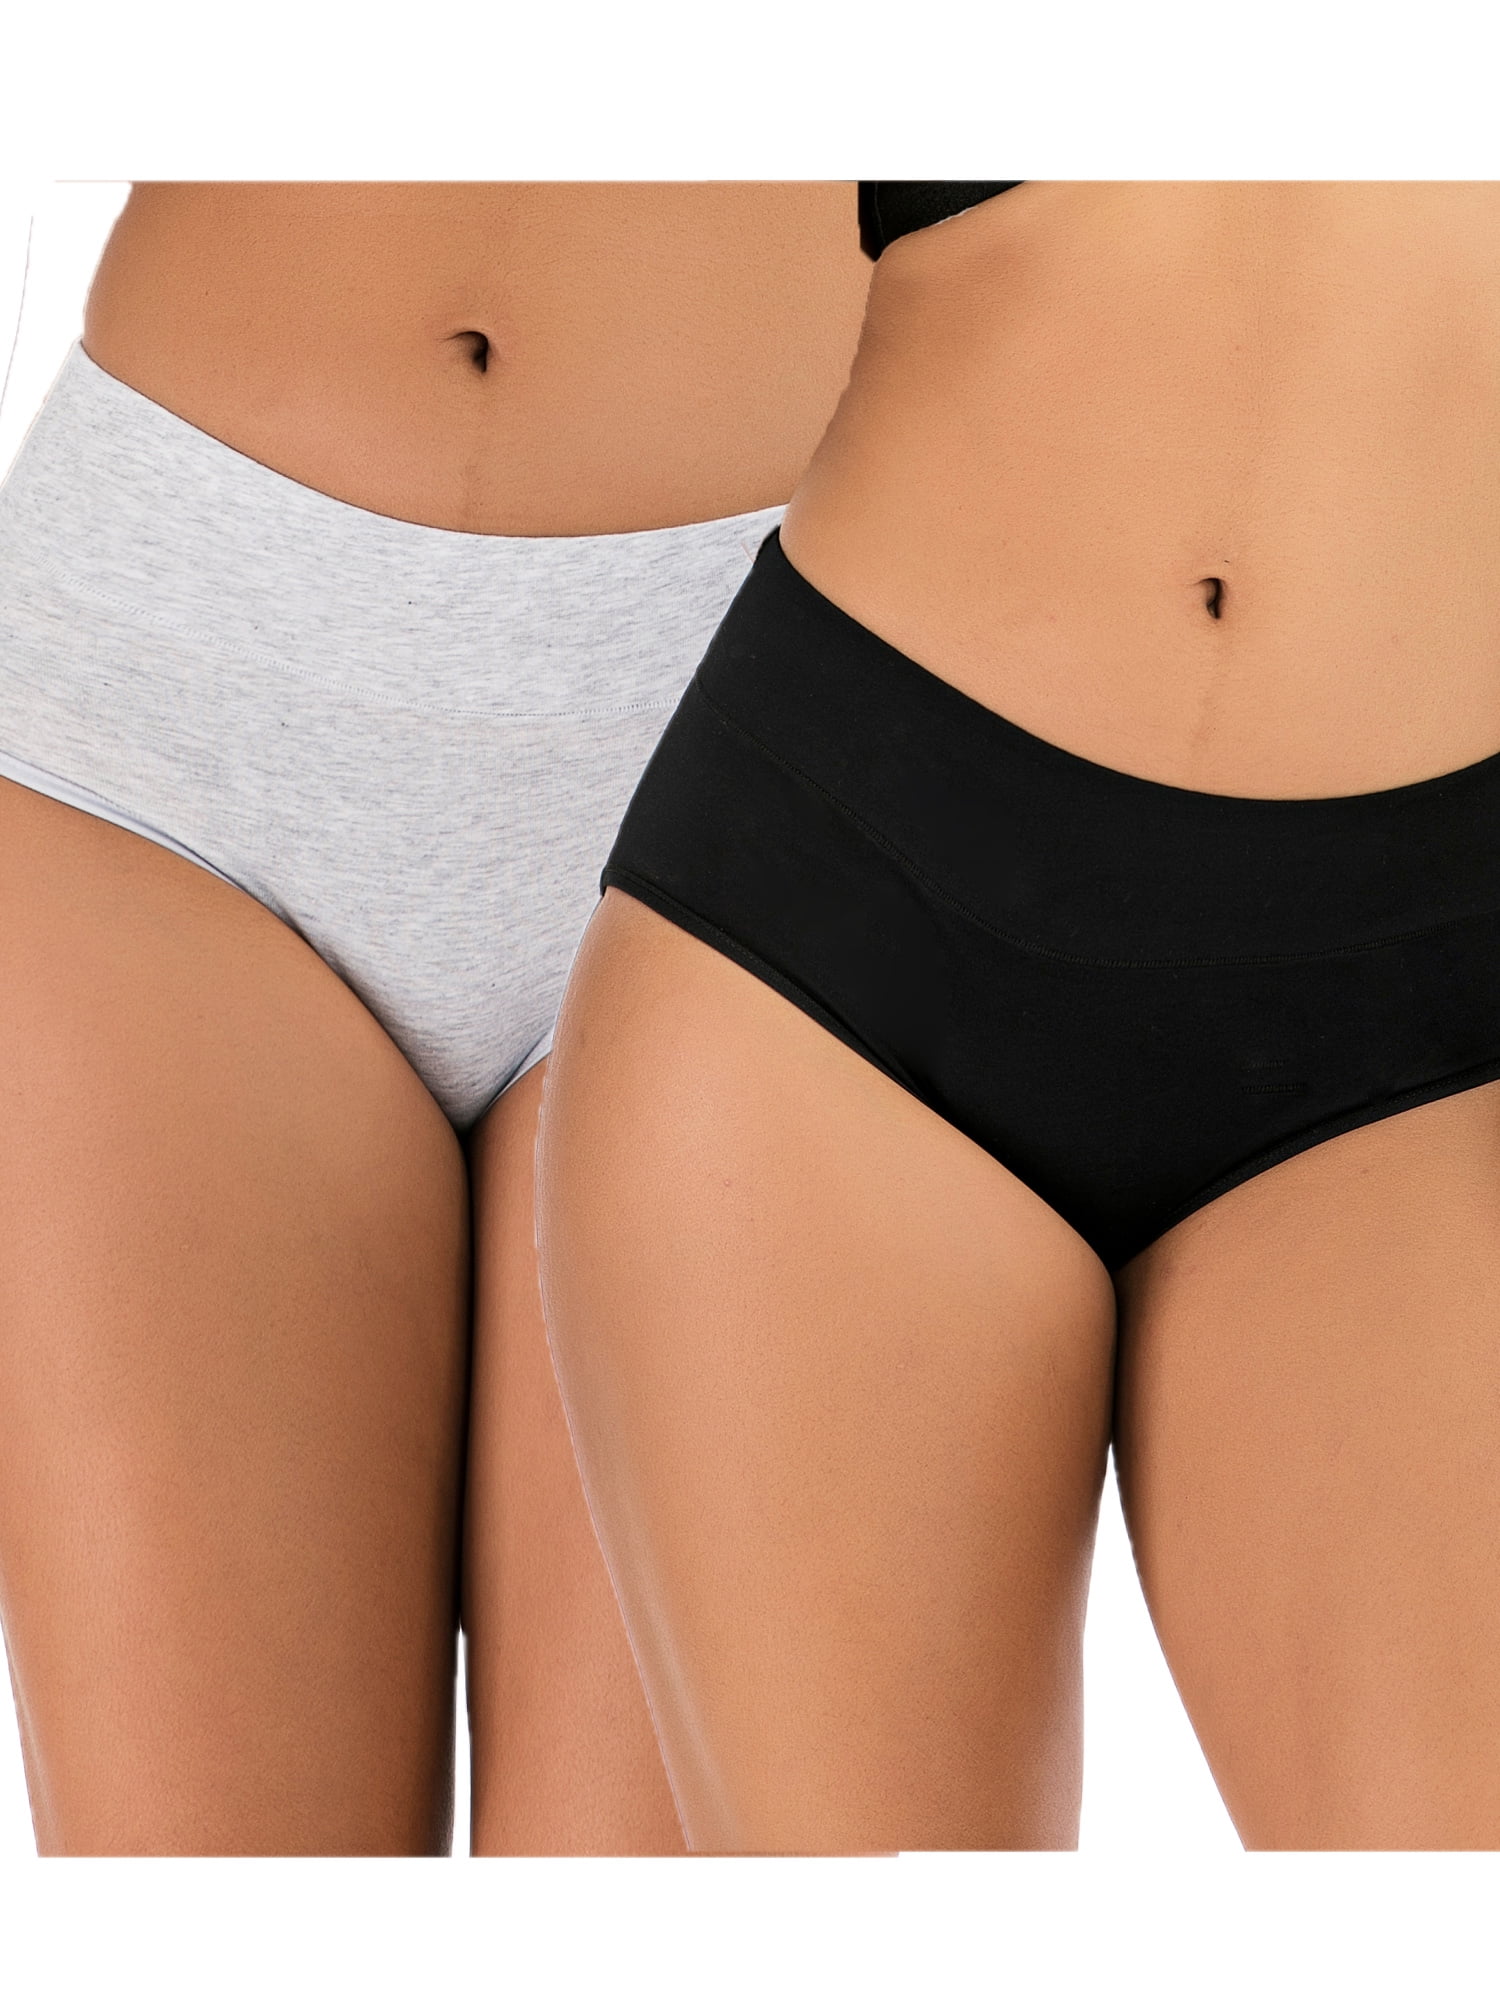 Black Seamless Underwear Women Panties Lingerie Briefs Soft Underpants Hipster 